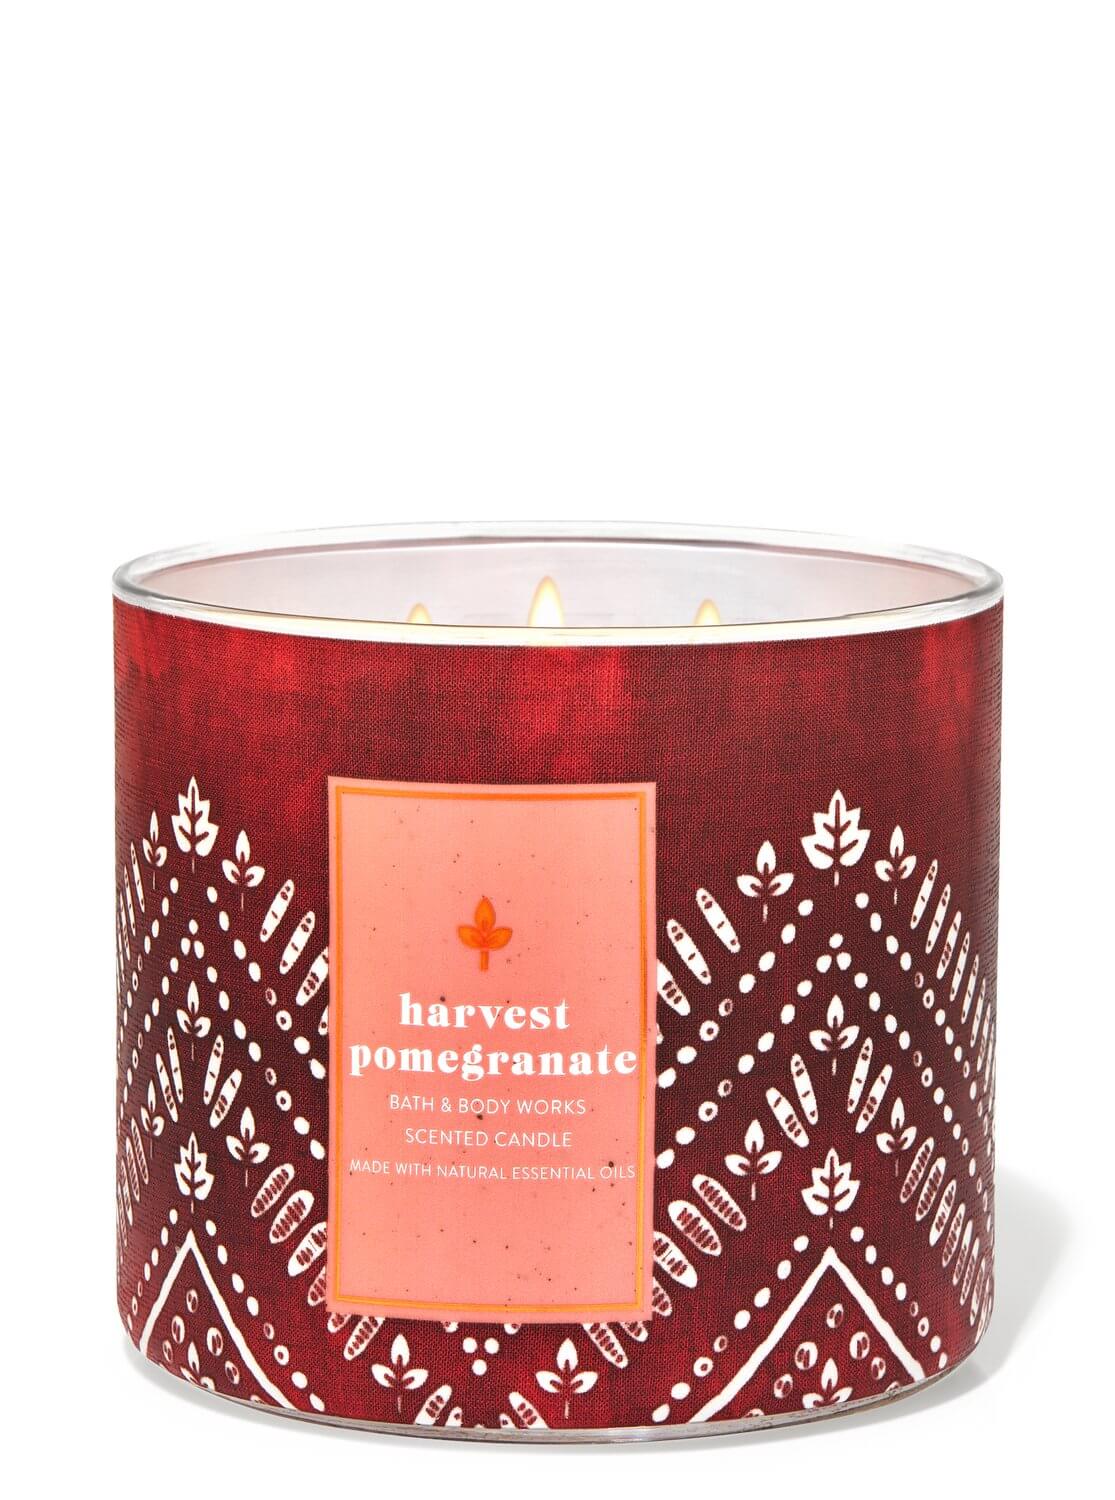 Bath & Body Works Harvest Pomegranate 3-Wick Candle